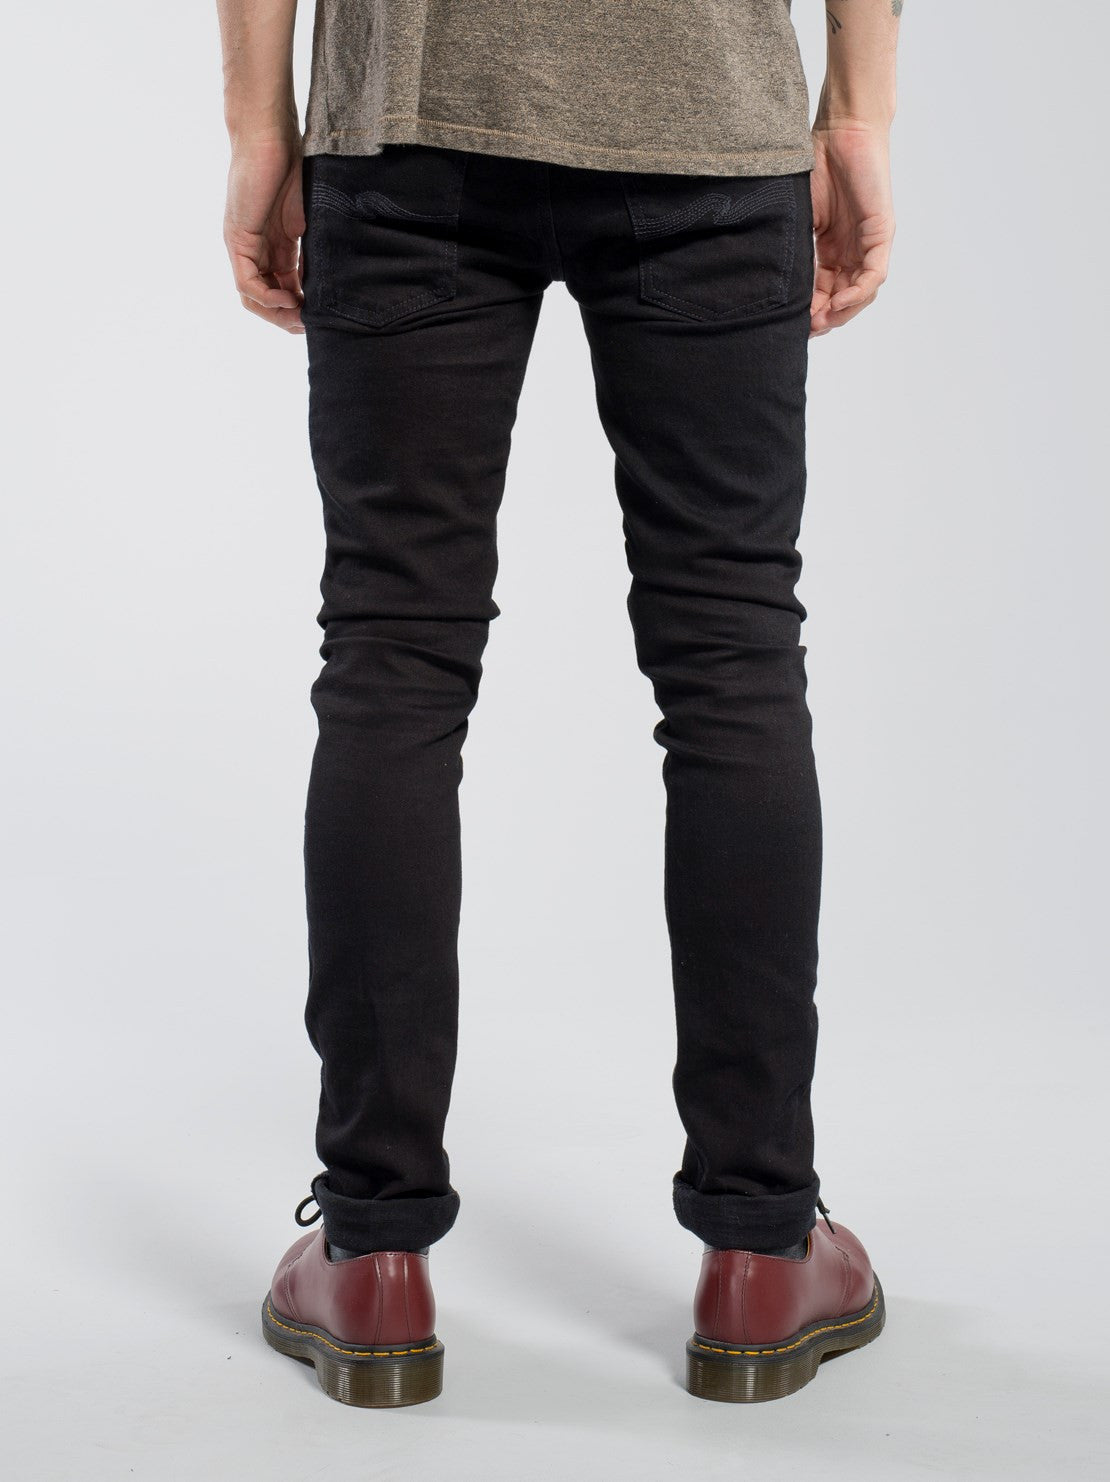 black jeans tight